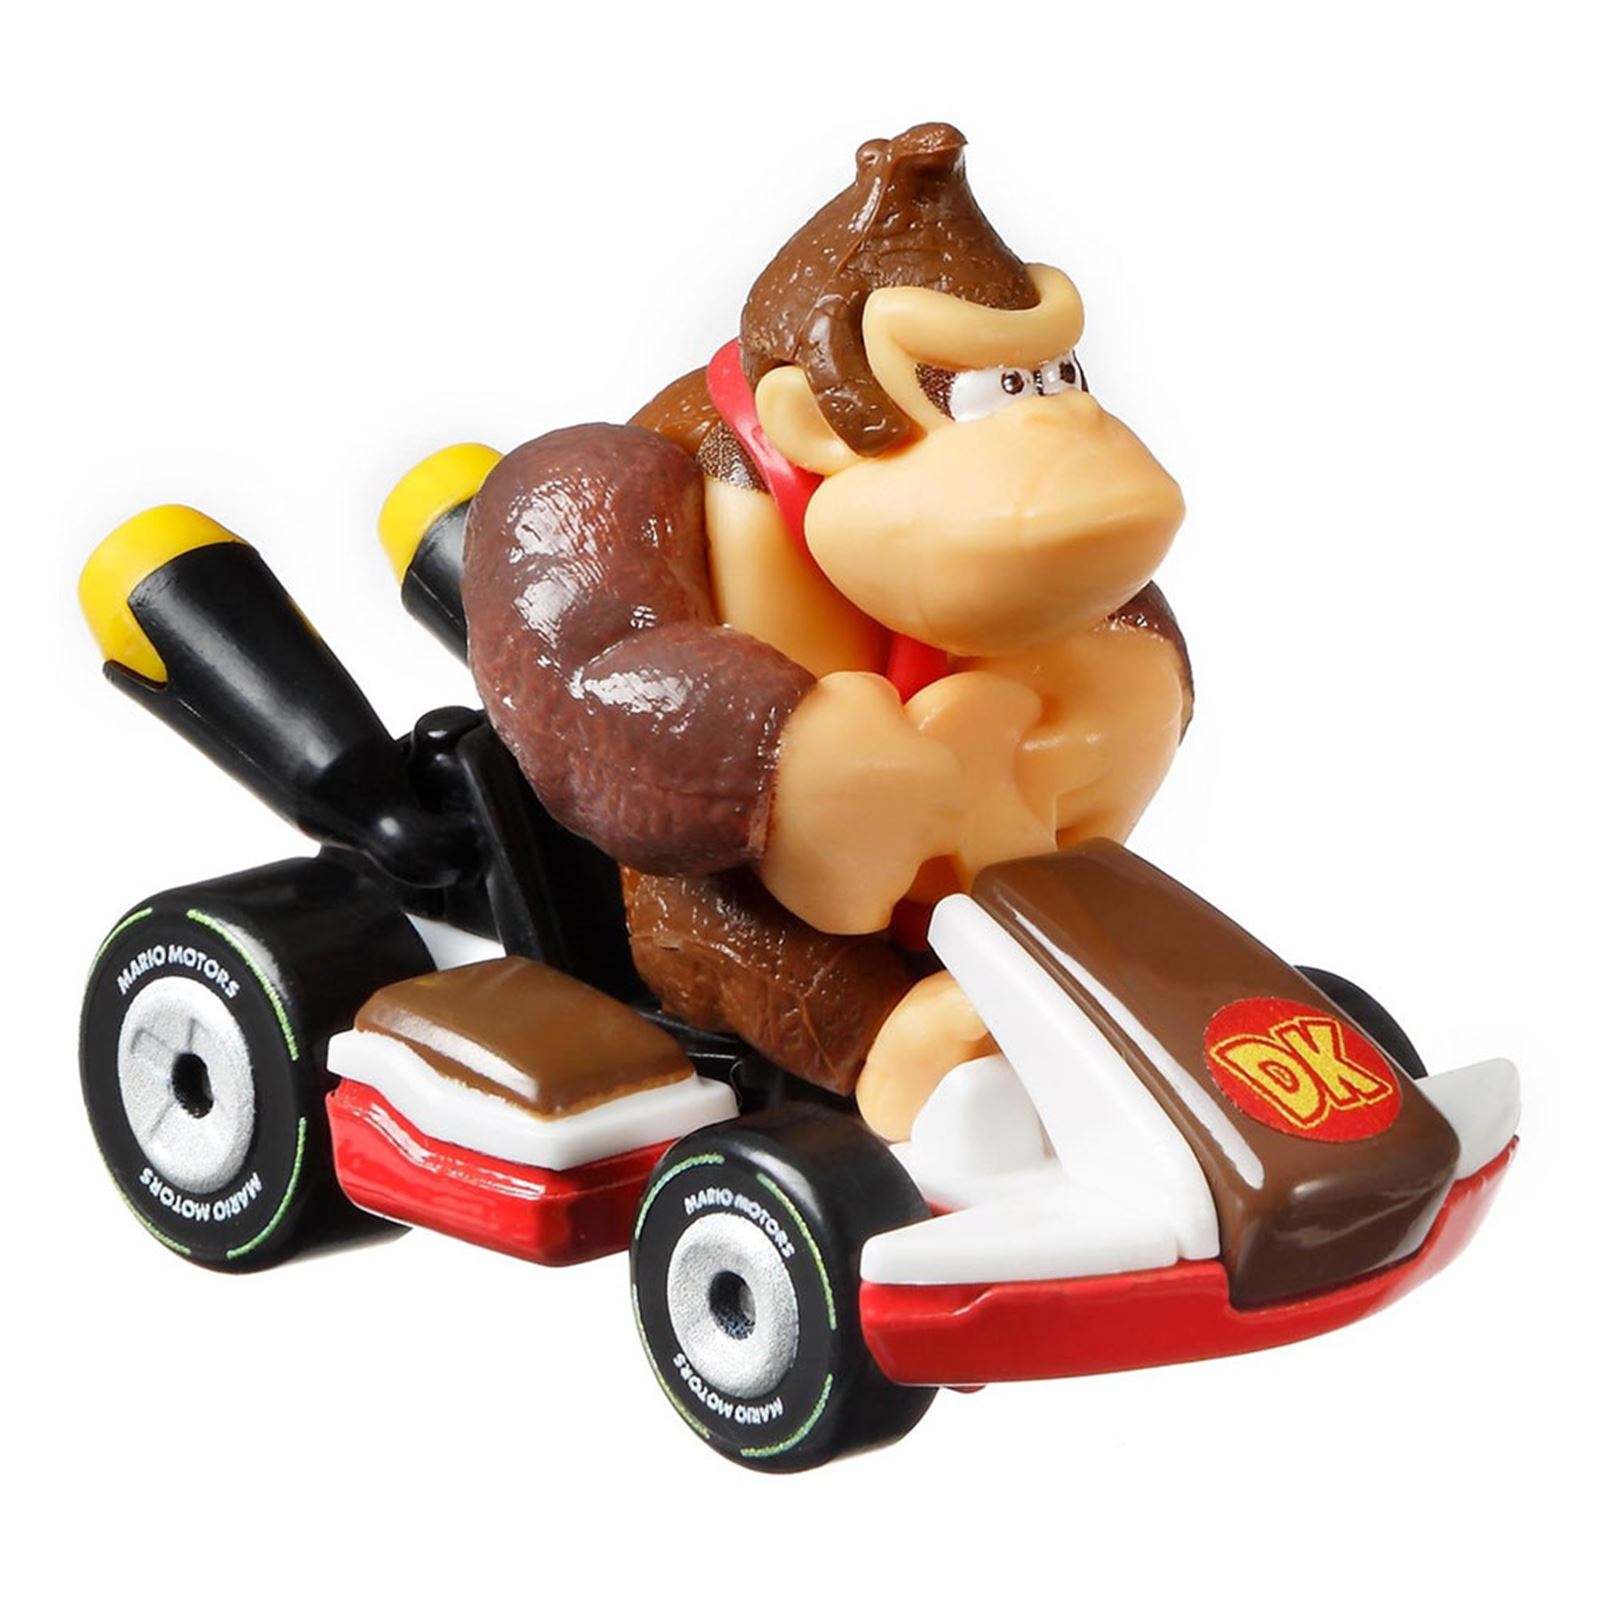 Hot Wheels Mario Kart Karakter Araçlar Kahverengi 3+ Yaş